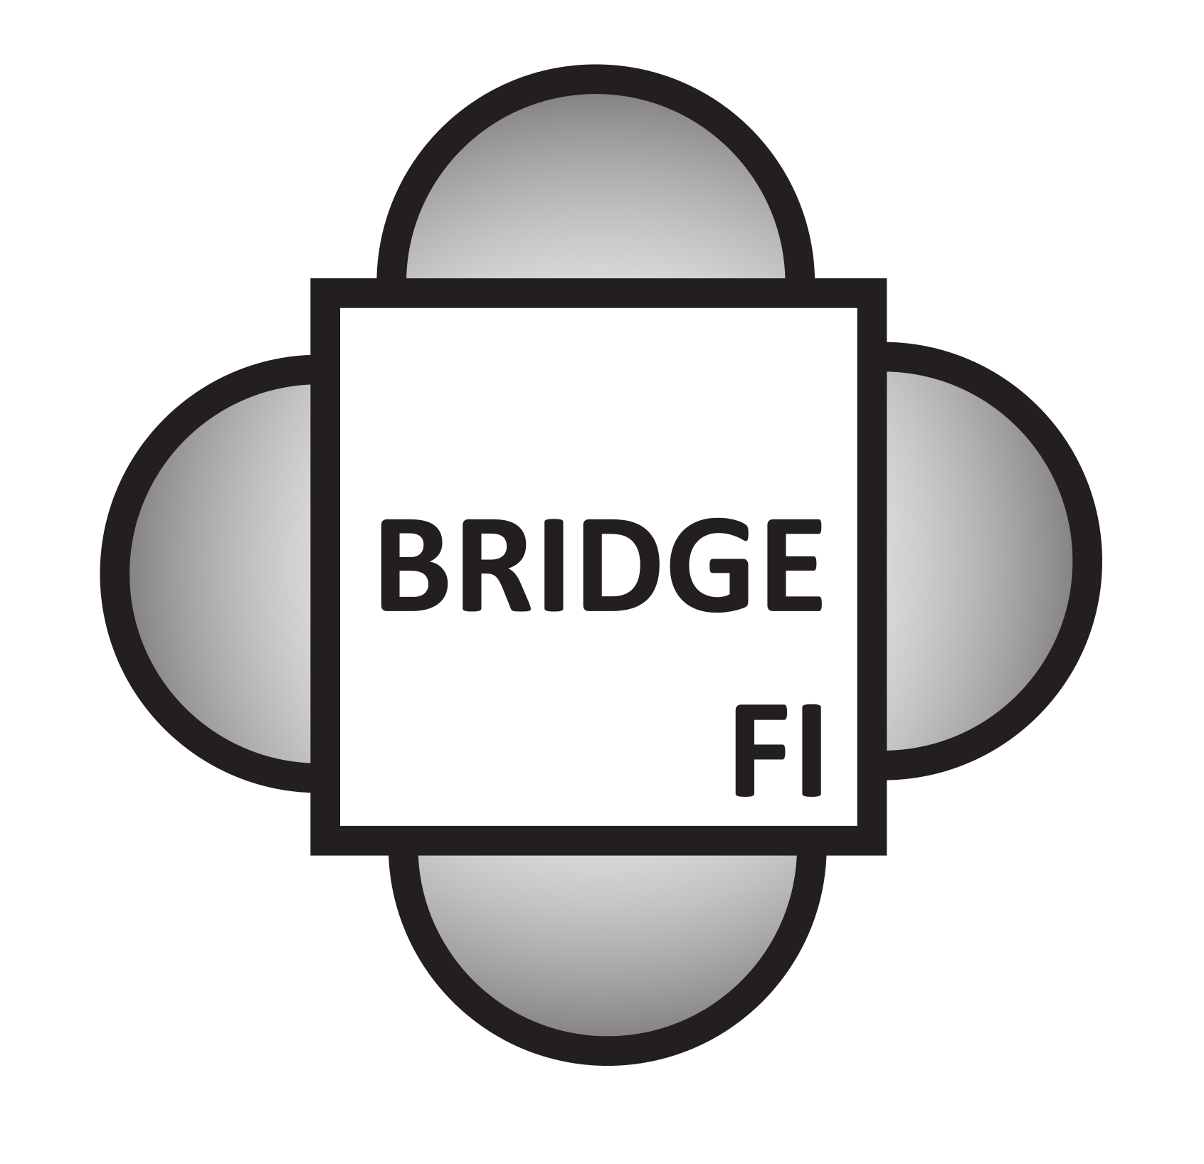 LIITE 9 Suomen Bridgeliitto Finlands Bridgeförbund ry MP-kilpailukategoriat ja